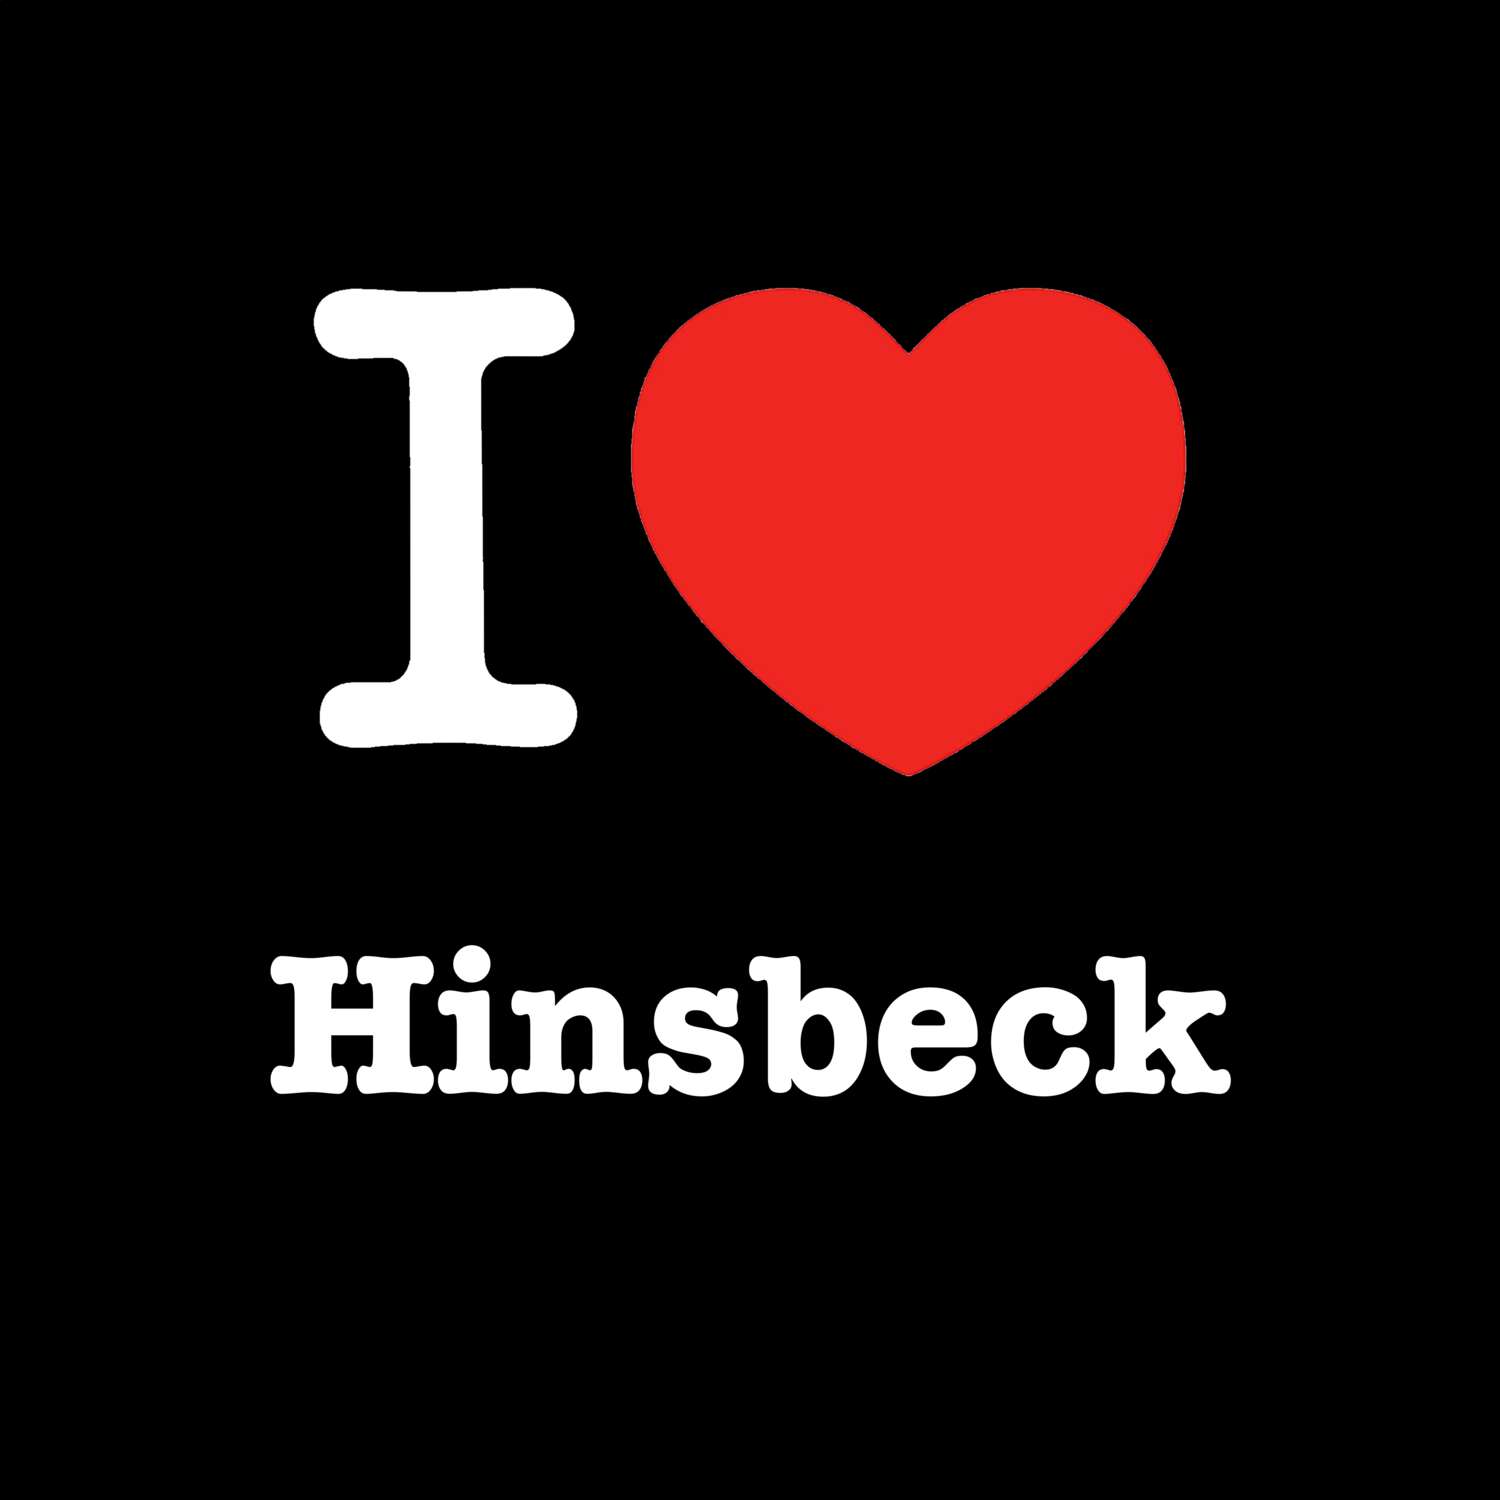 Hinsbeck T-Shirt »I love«